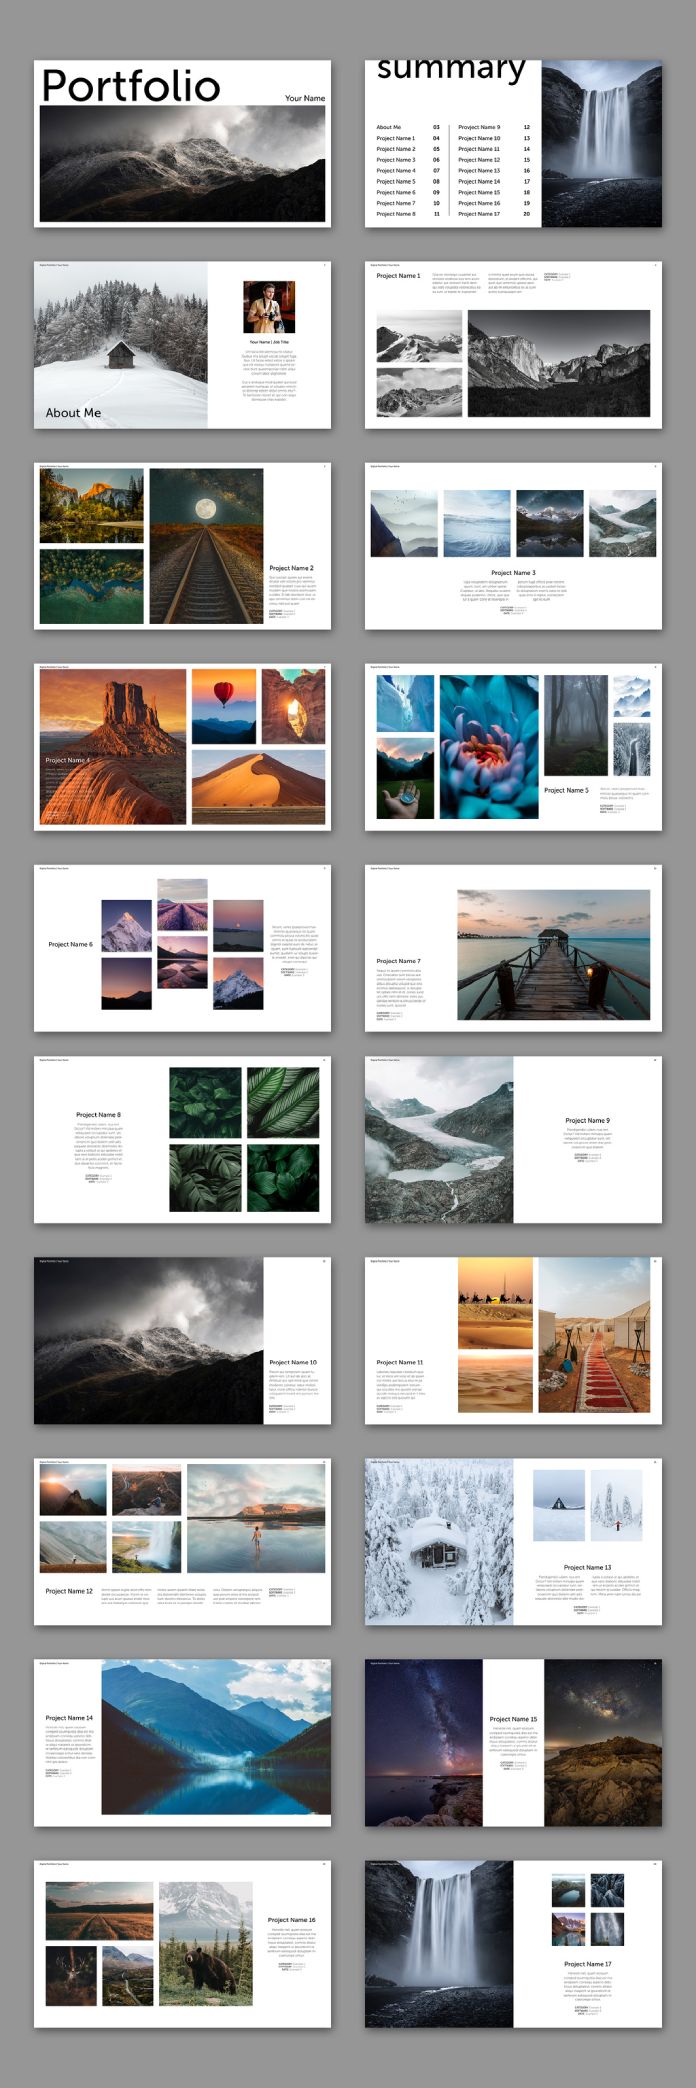 A Digital Photography Portfolio Template for Adobe InDesign by Tom Sarraipo